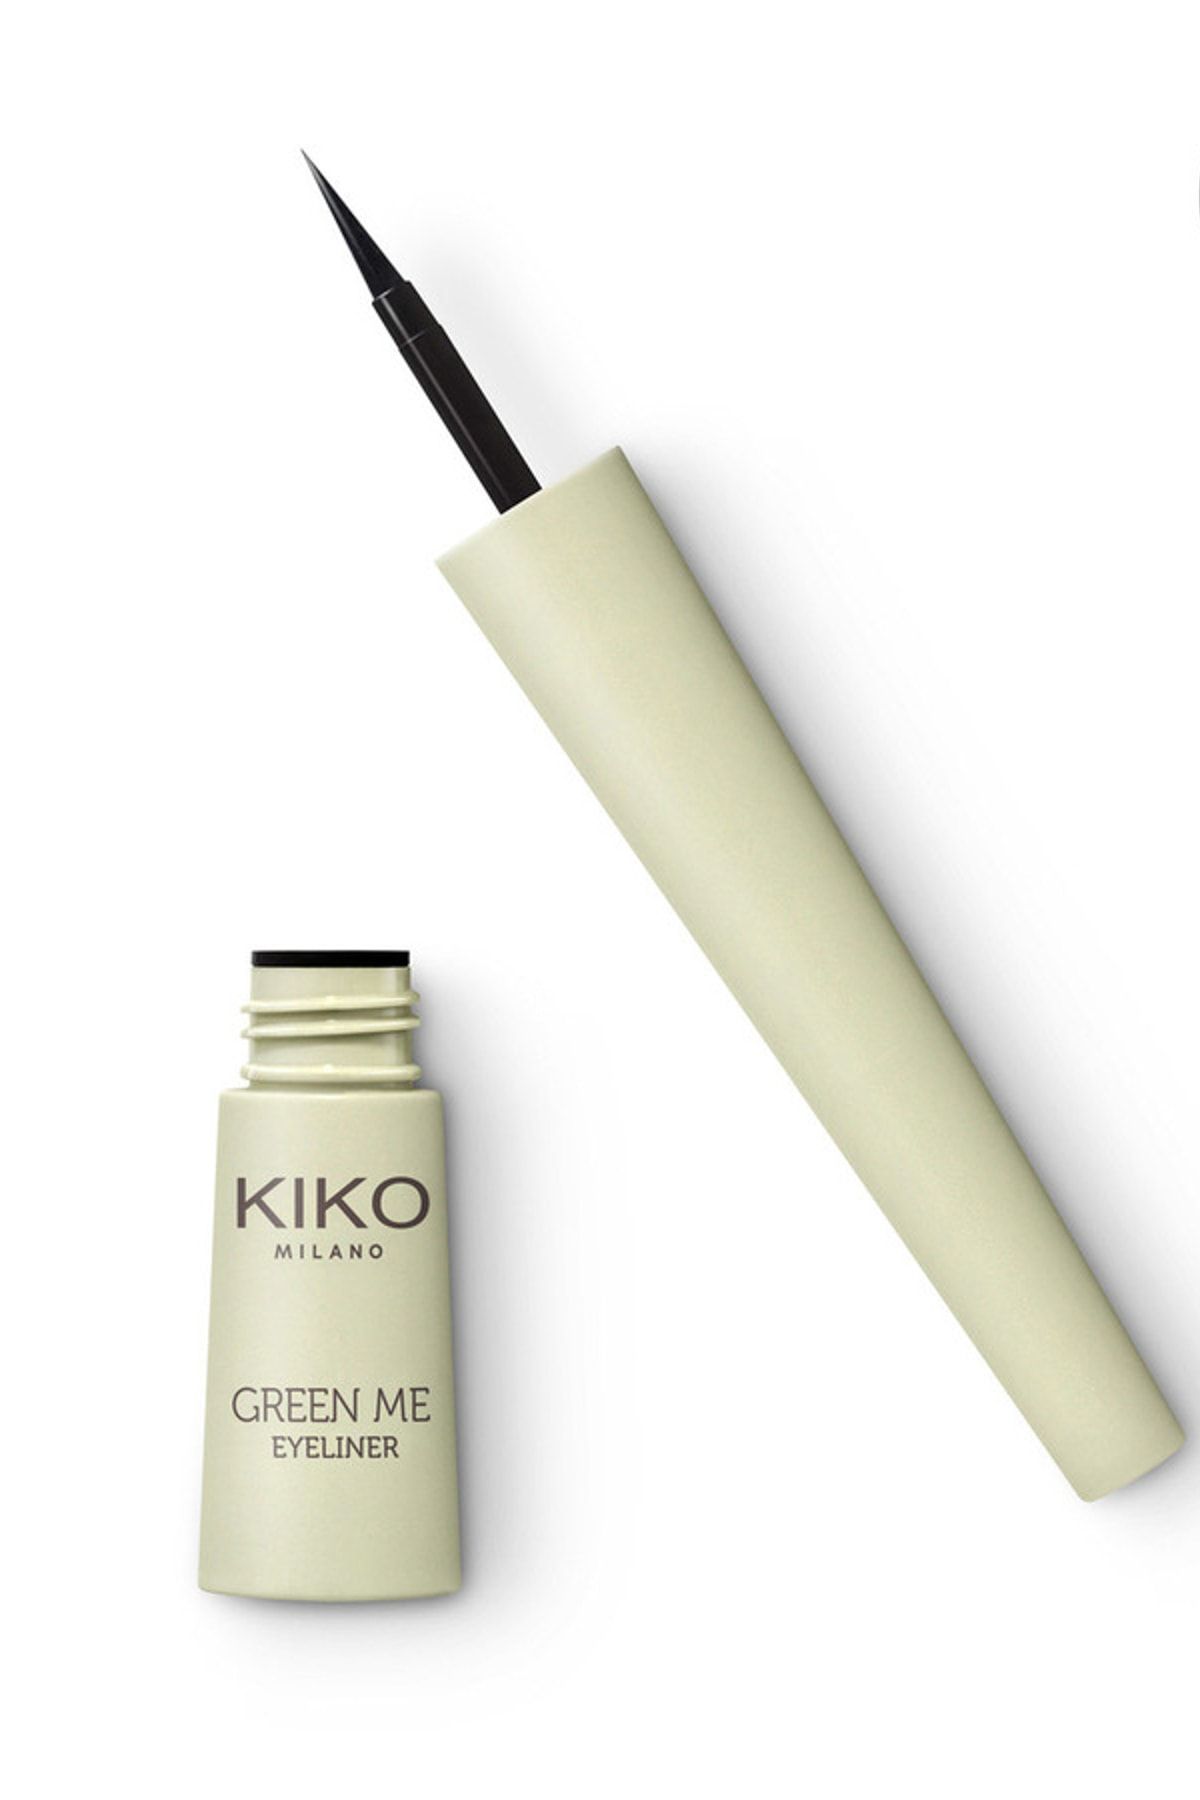 KIKO Eyeliner - New Green Me Liquid Eyeliner - Edition 2020 8025272926485